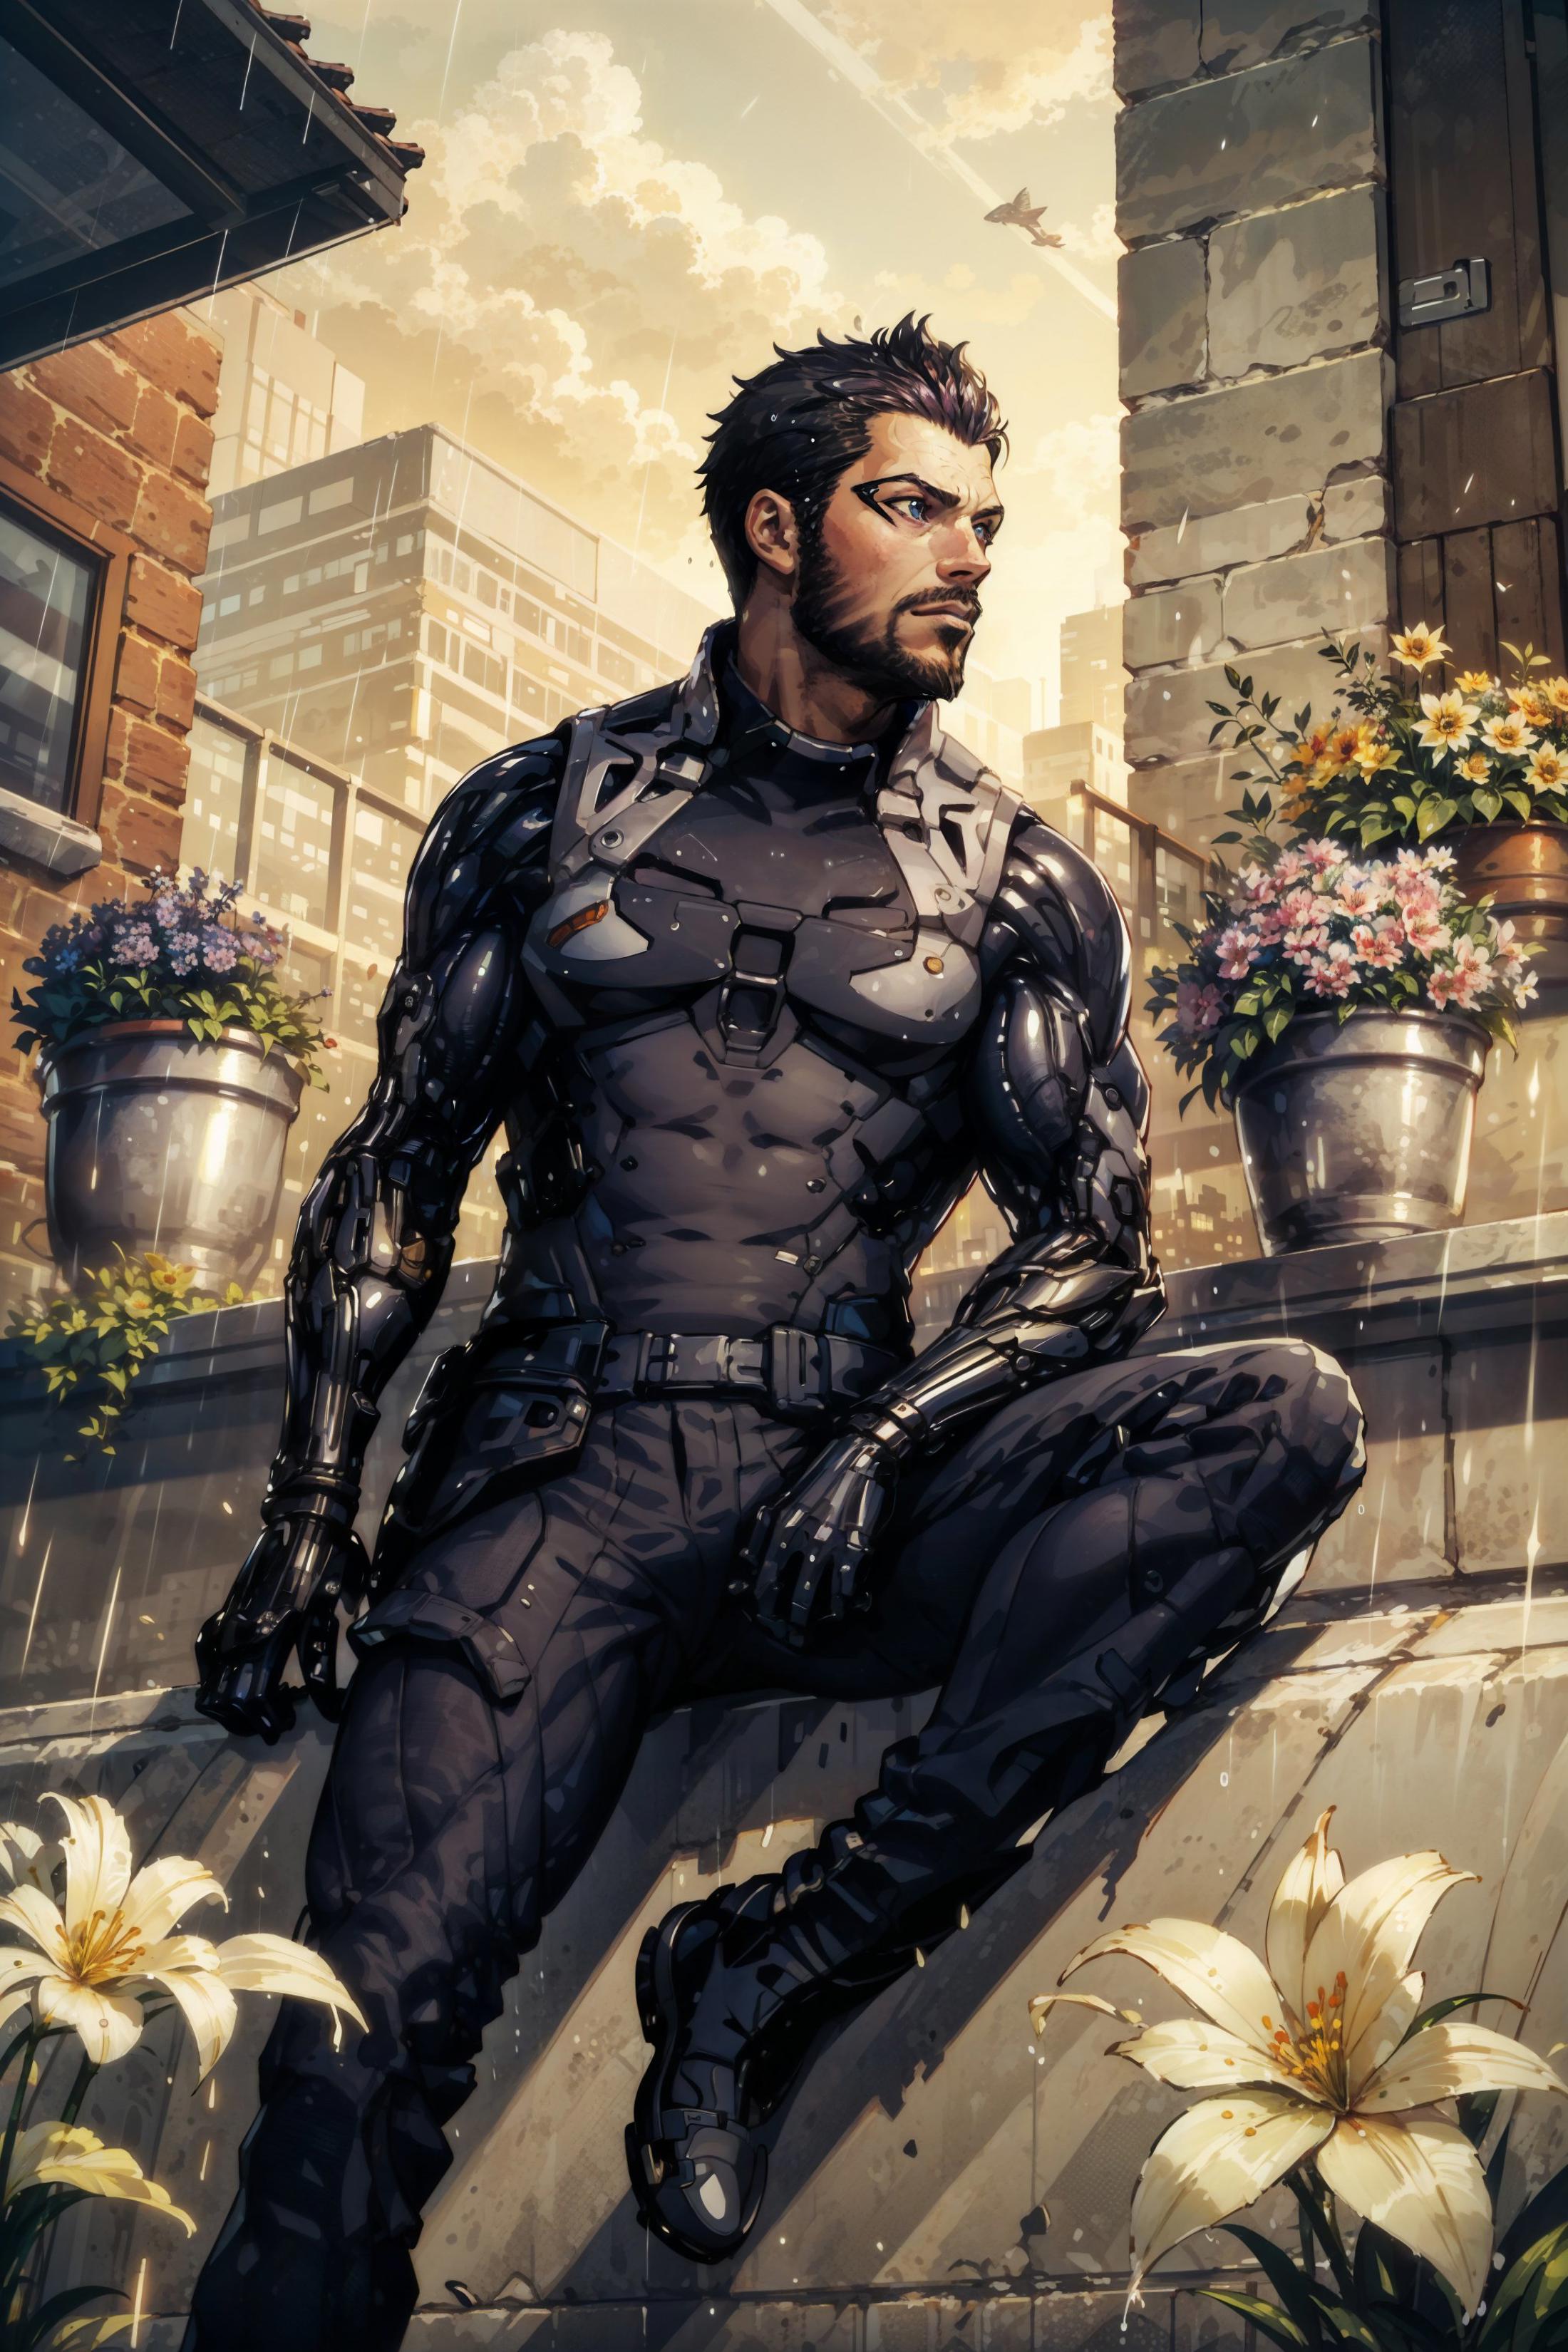 Adam Jensen | Deus Ex Game Franchise image by soul3142